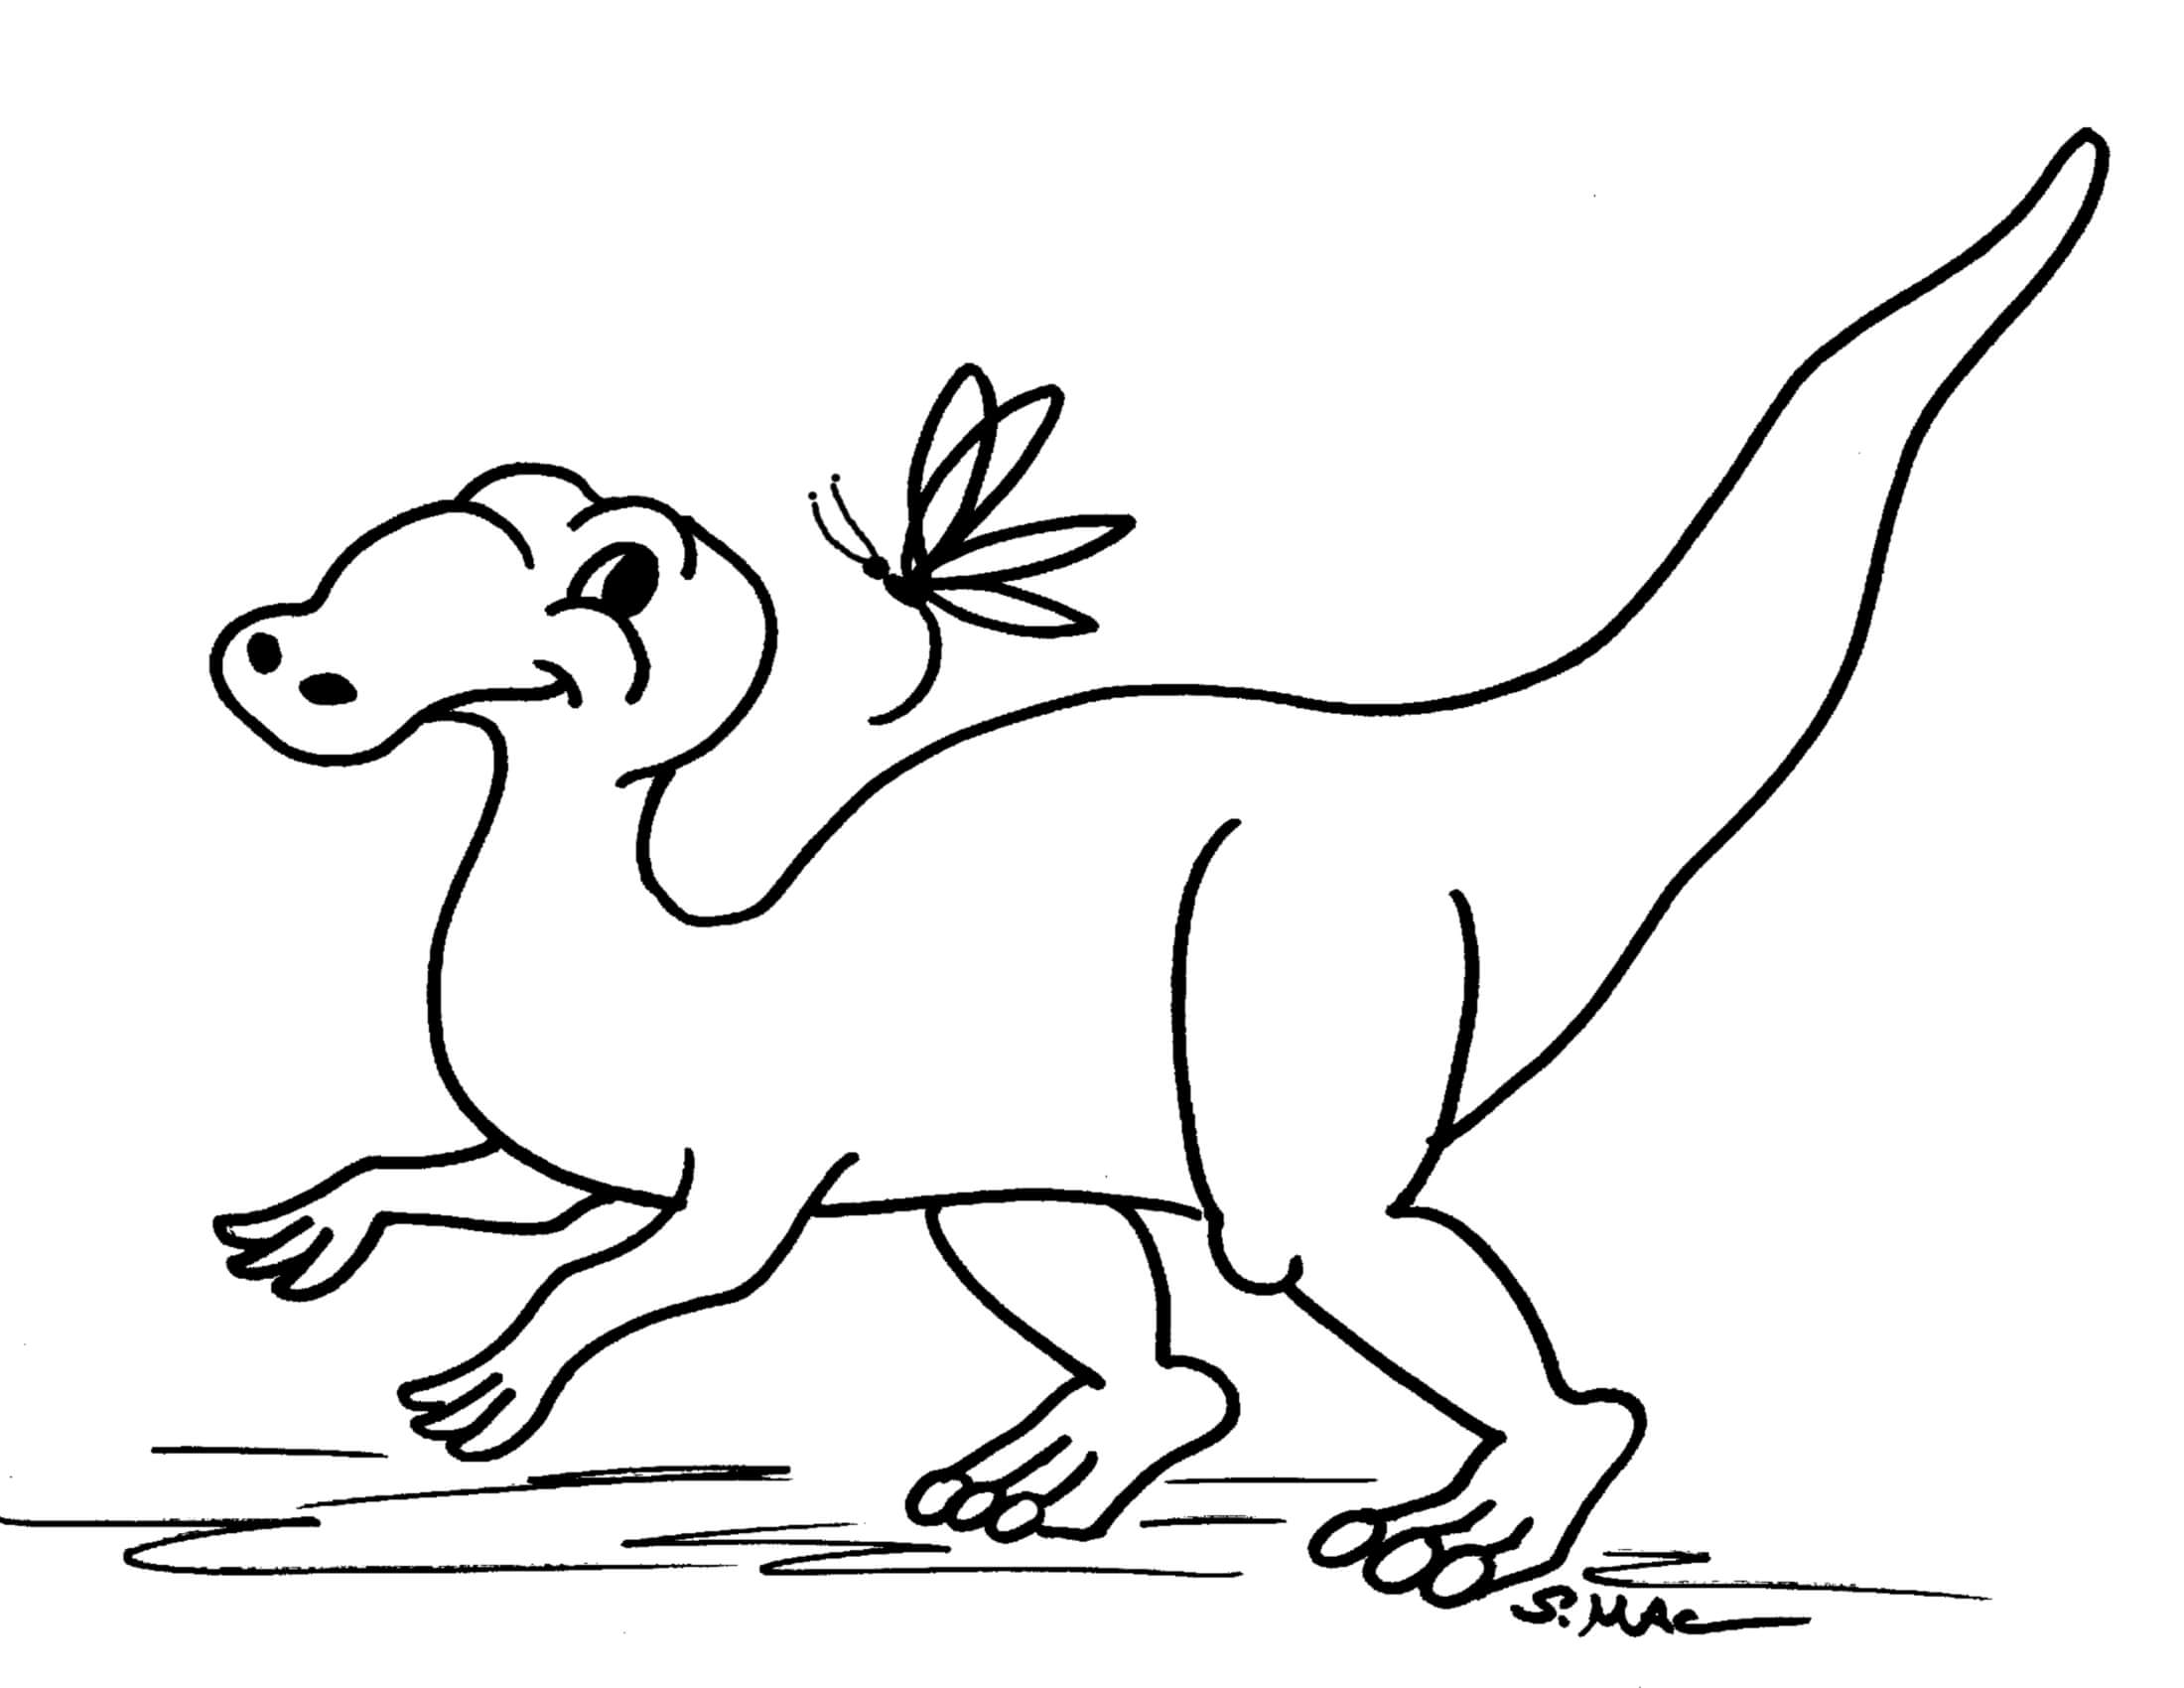 Hadrosaurus omalovánka